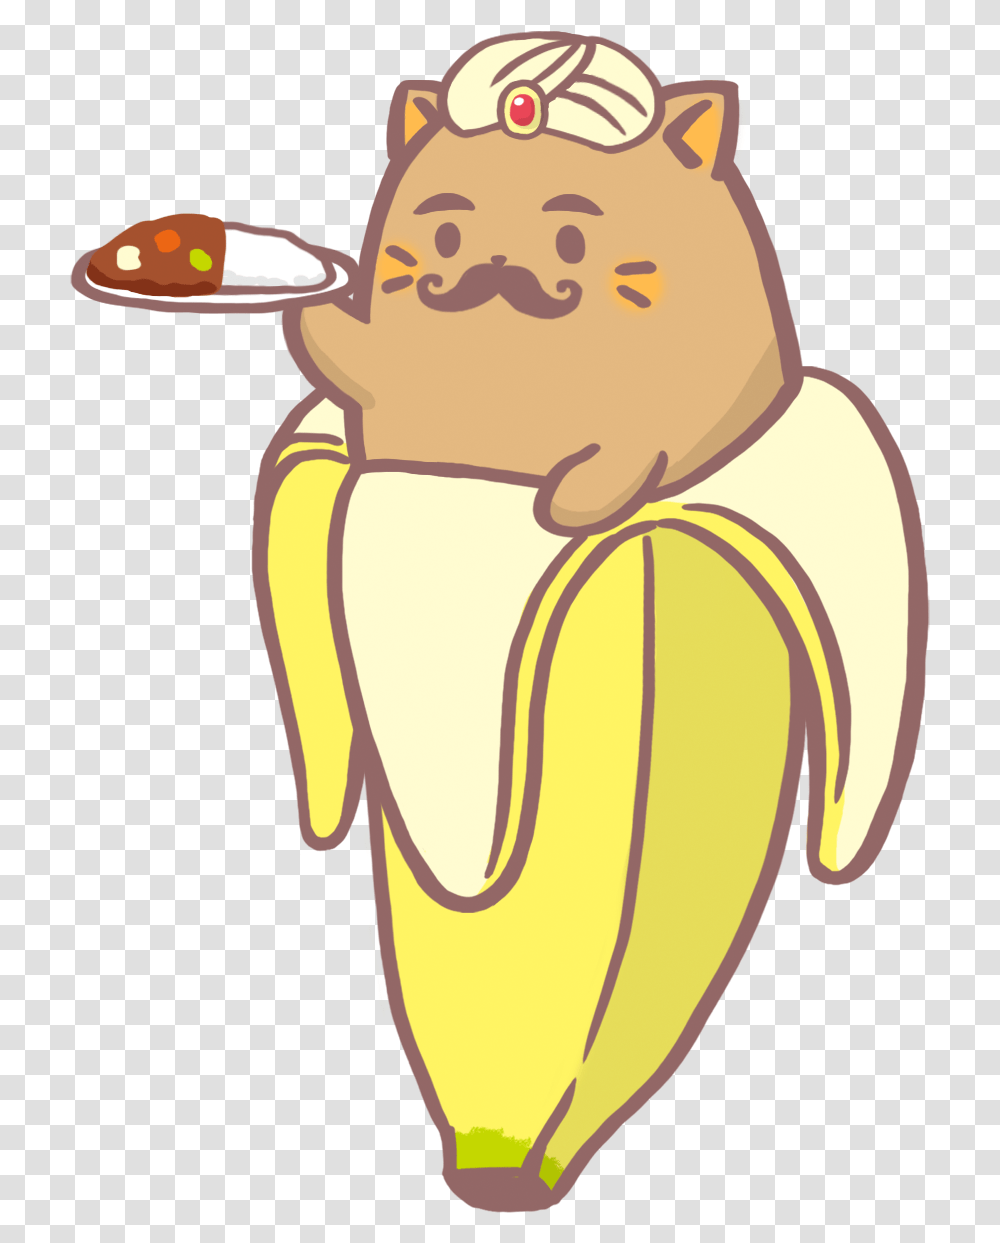 Bananya Wikia Cat Inside A Banana, Cutlery, Spoon, Eating, Food Transparent Png